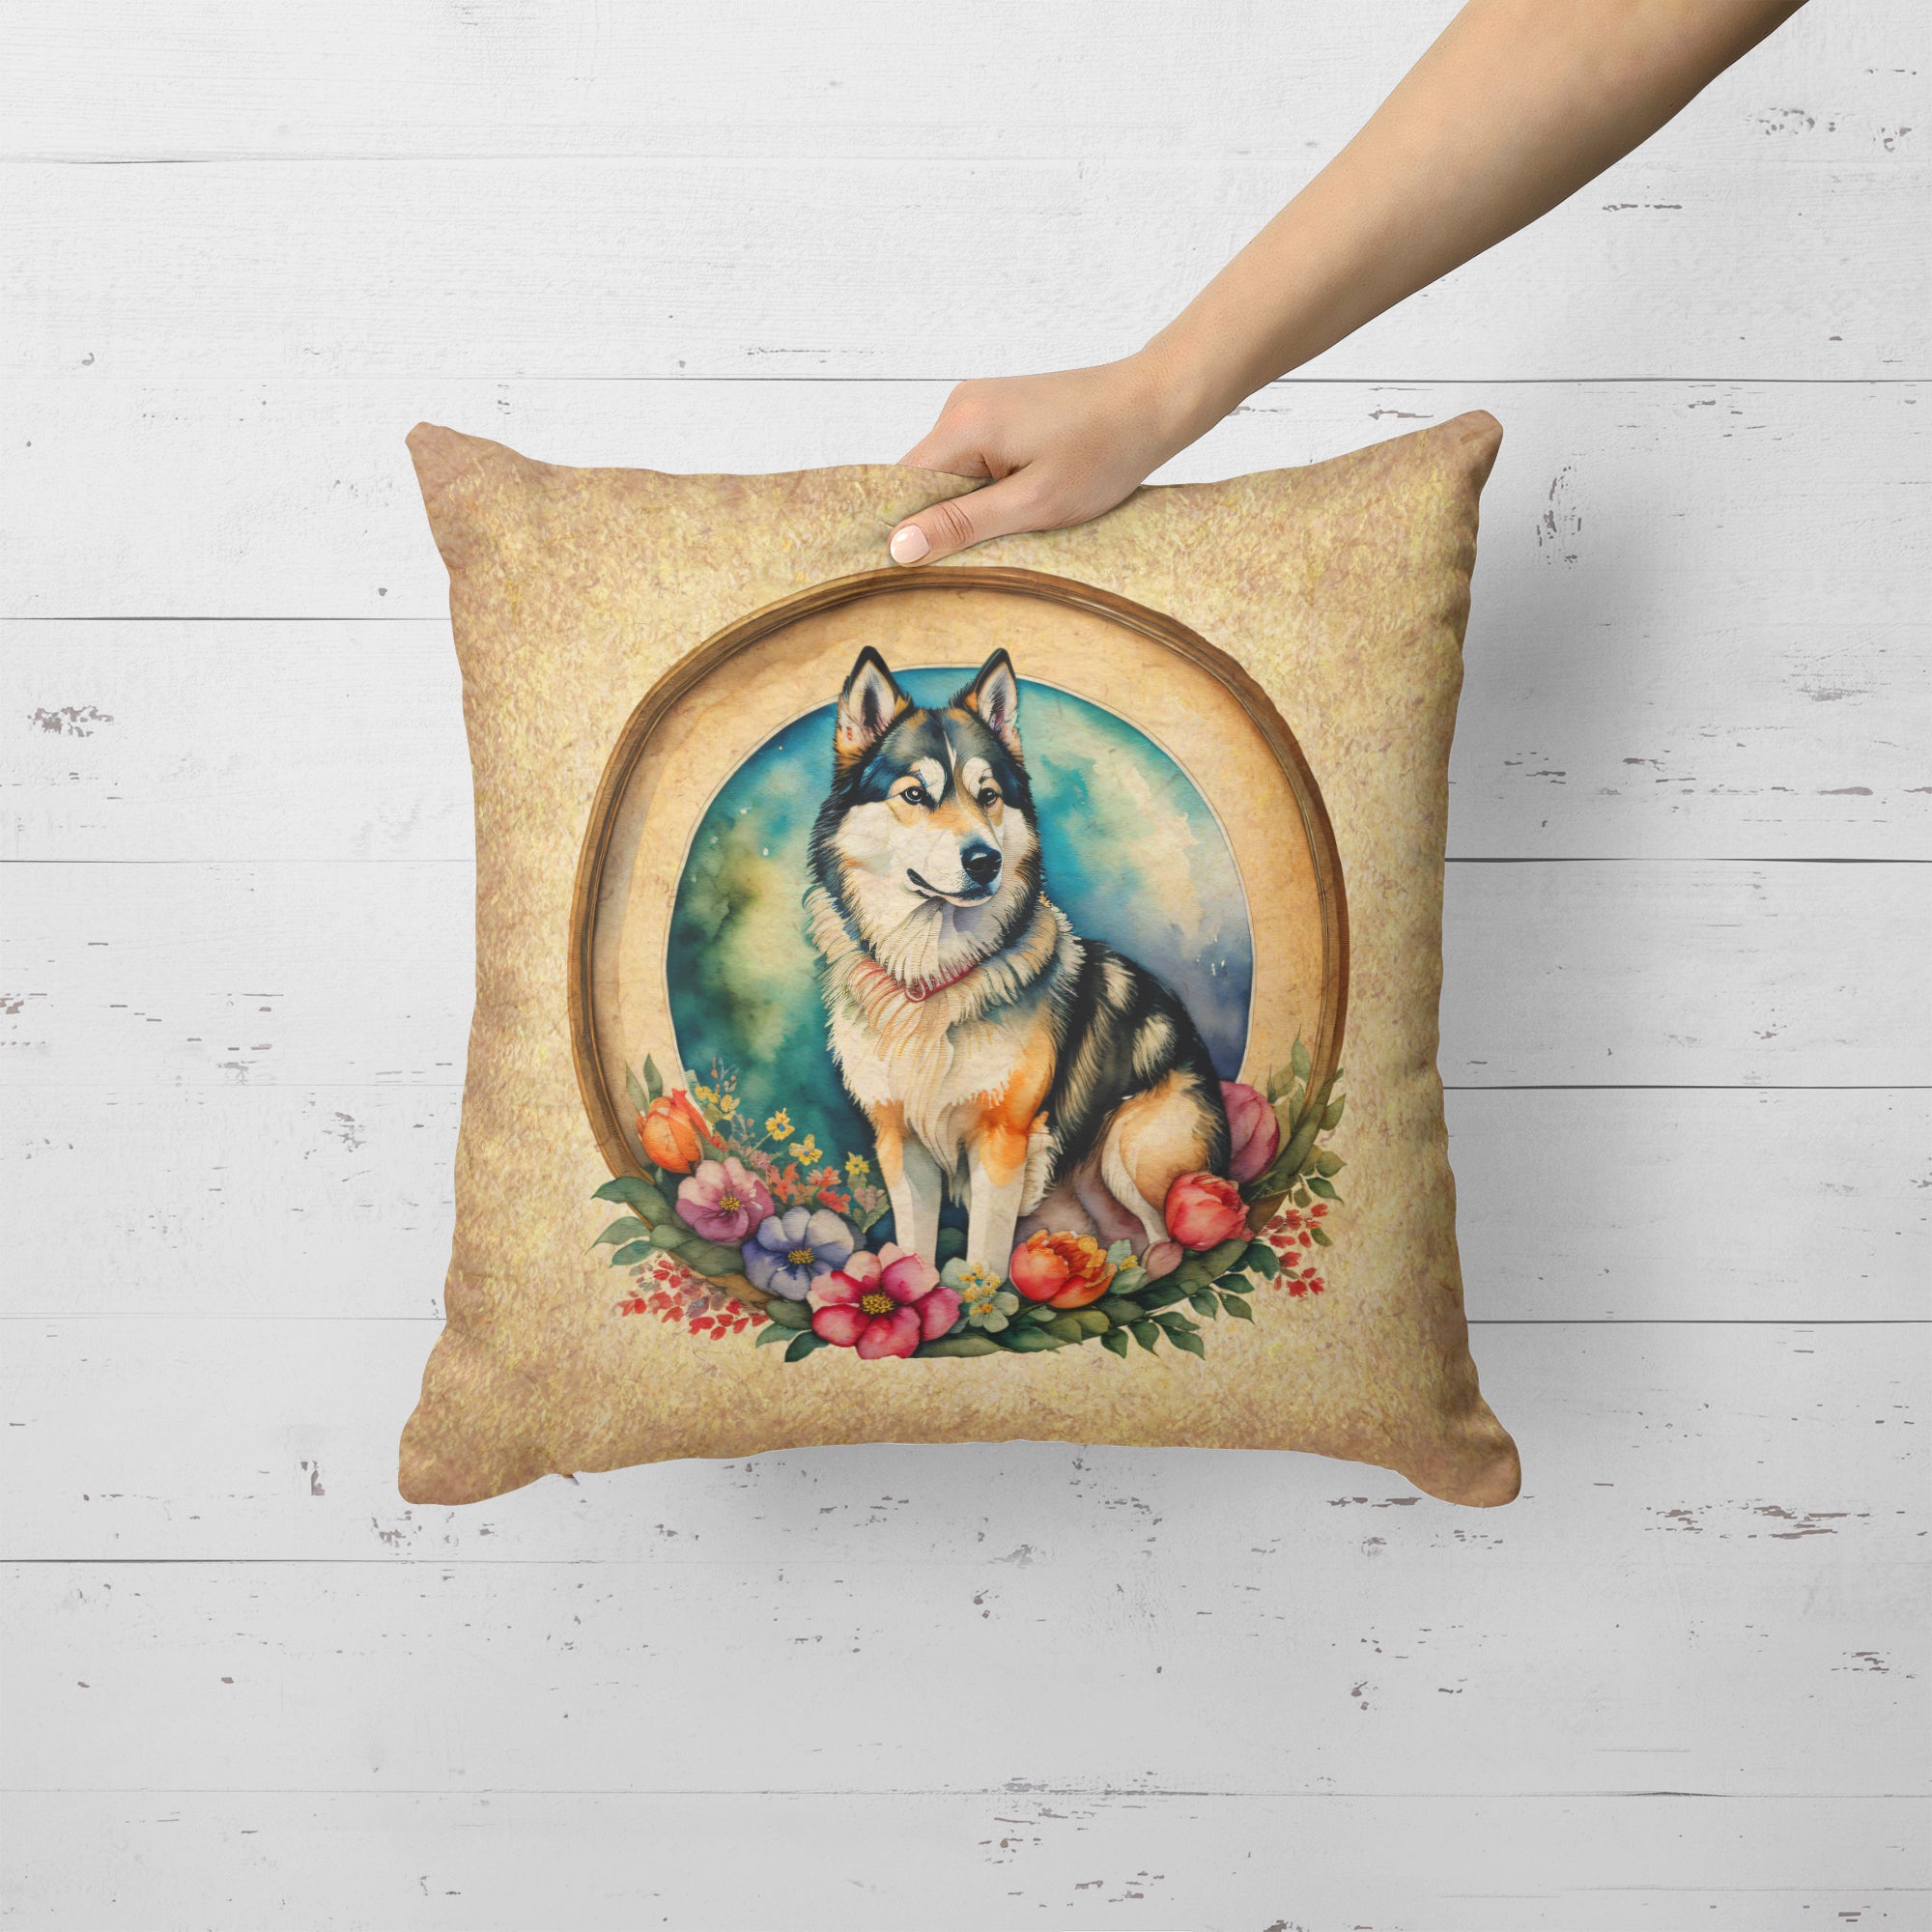 Buy this Alaskan Malamute and Flowers Fabric Decorative Pillow